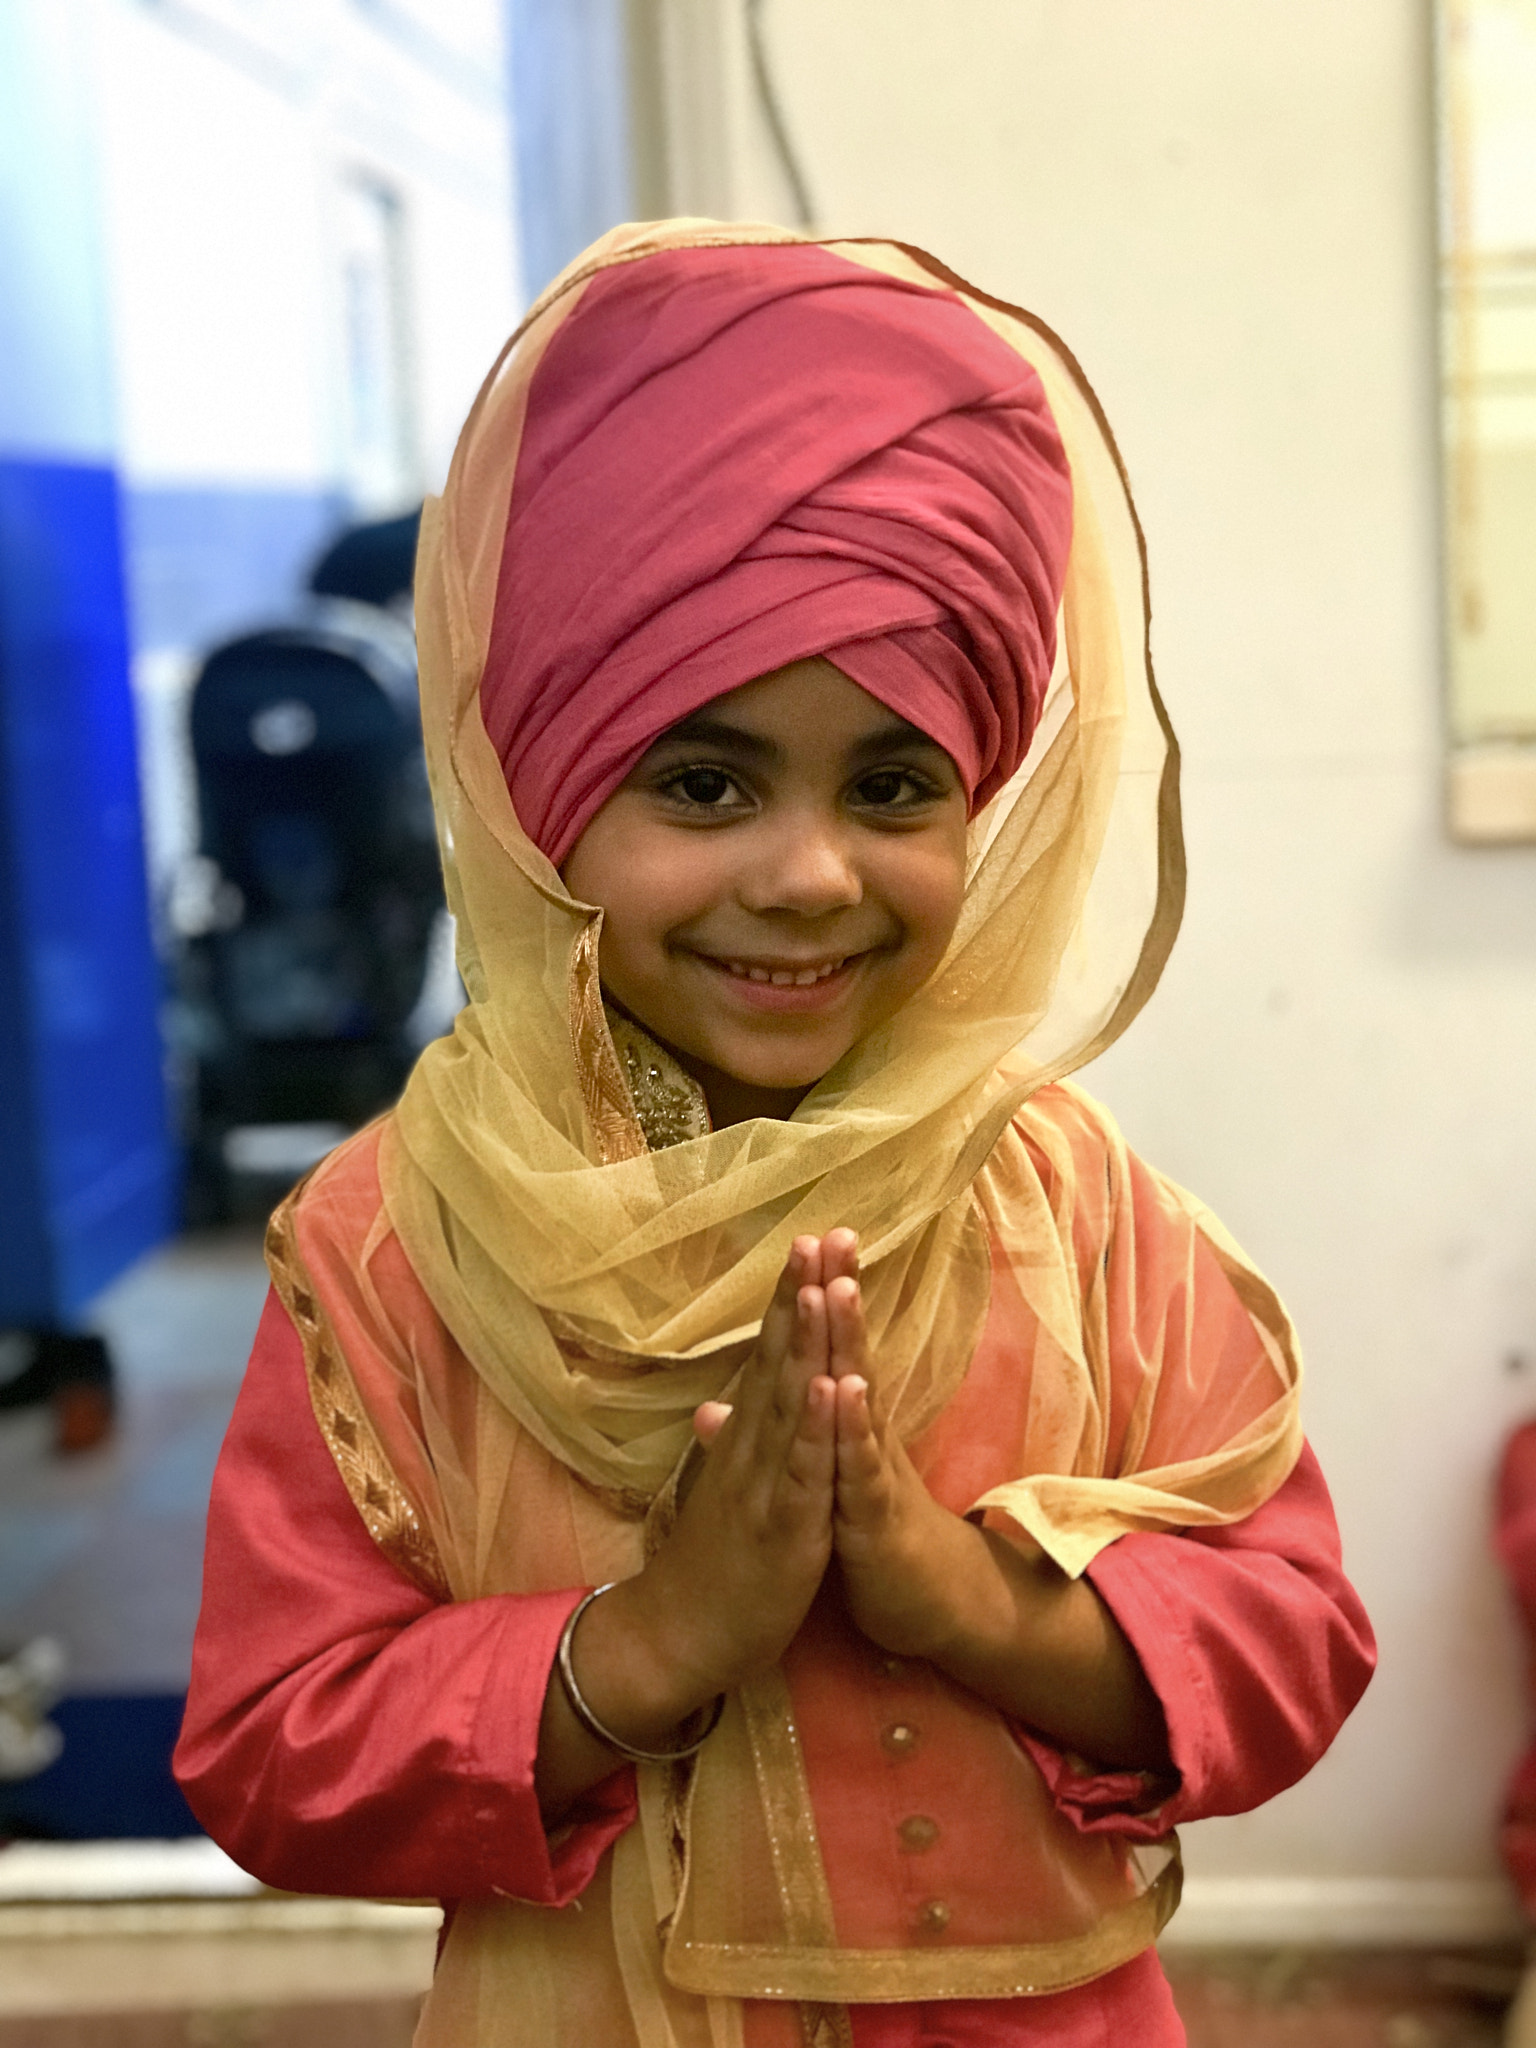 A small girl in a turban.